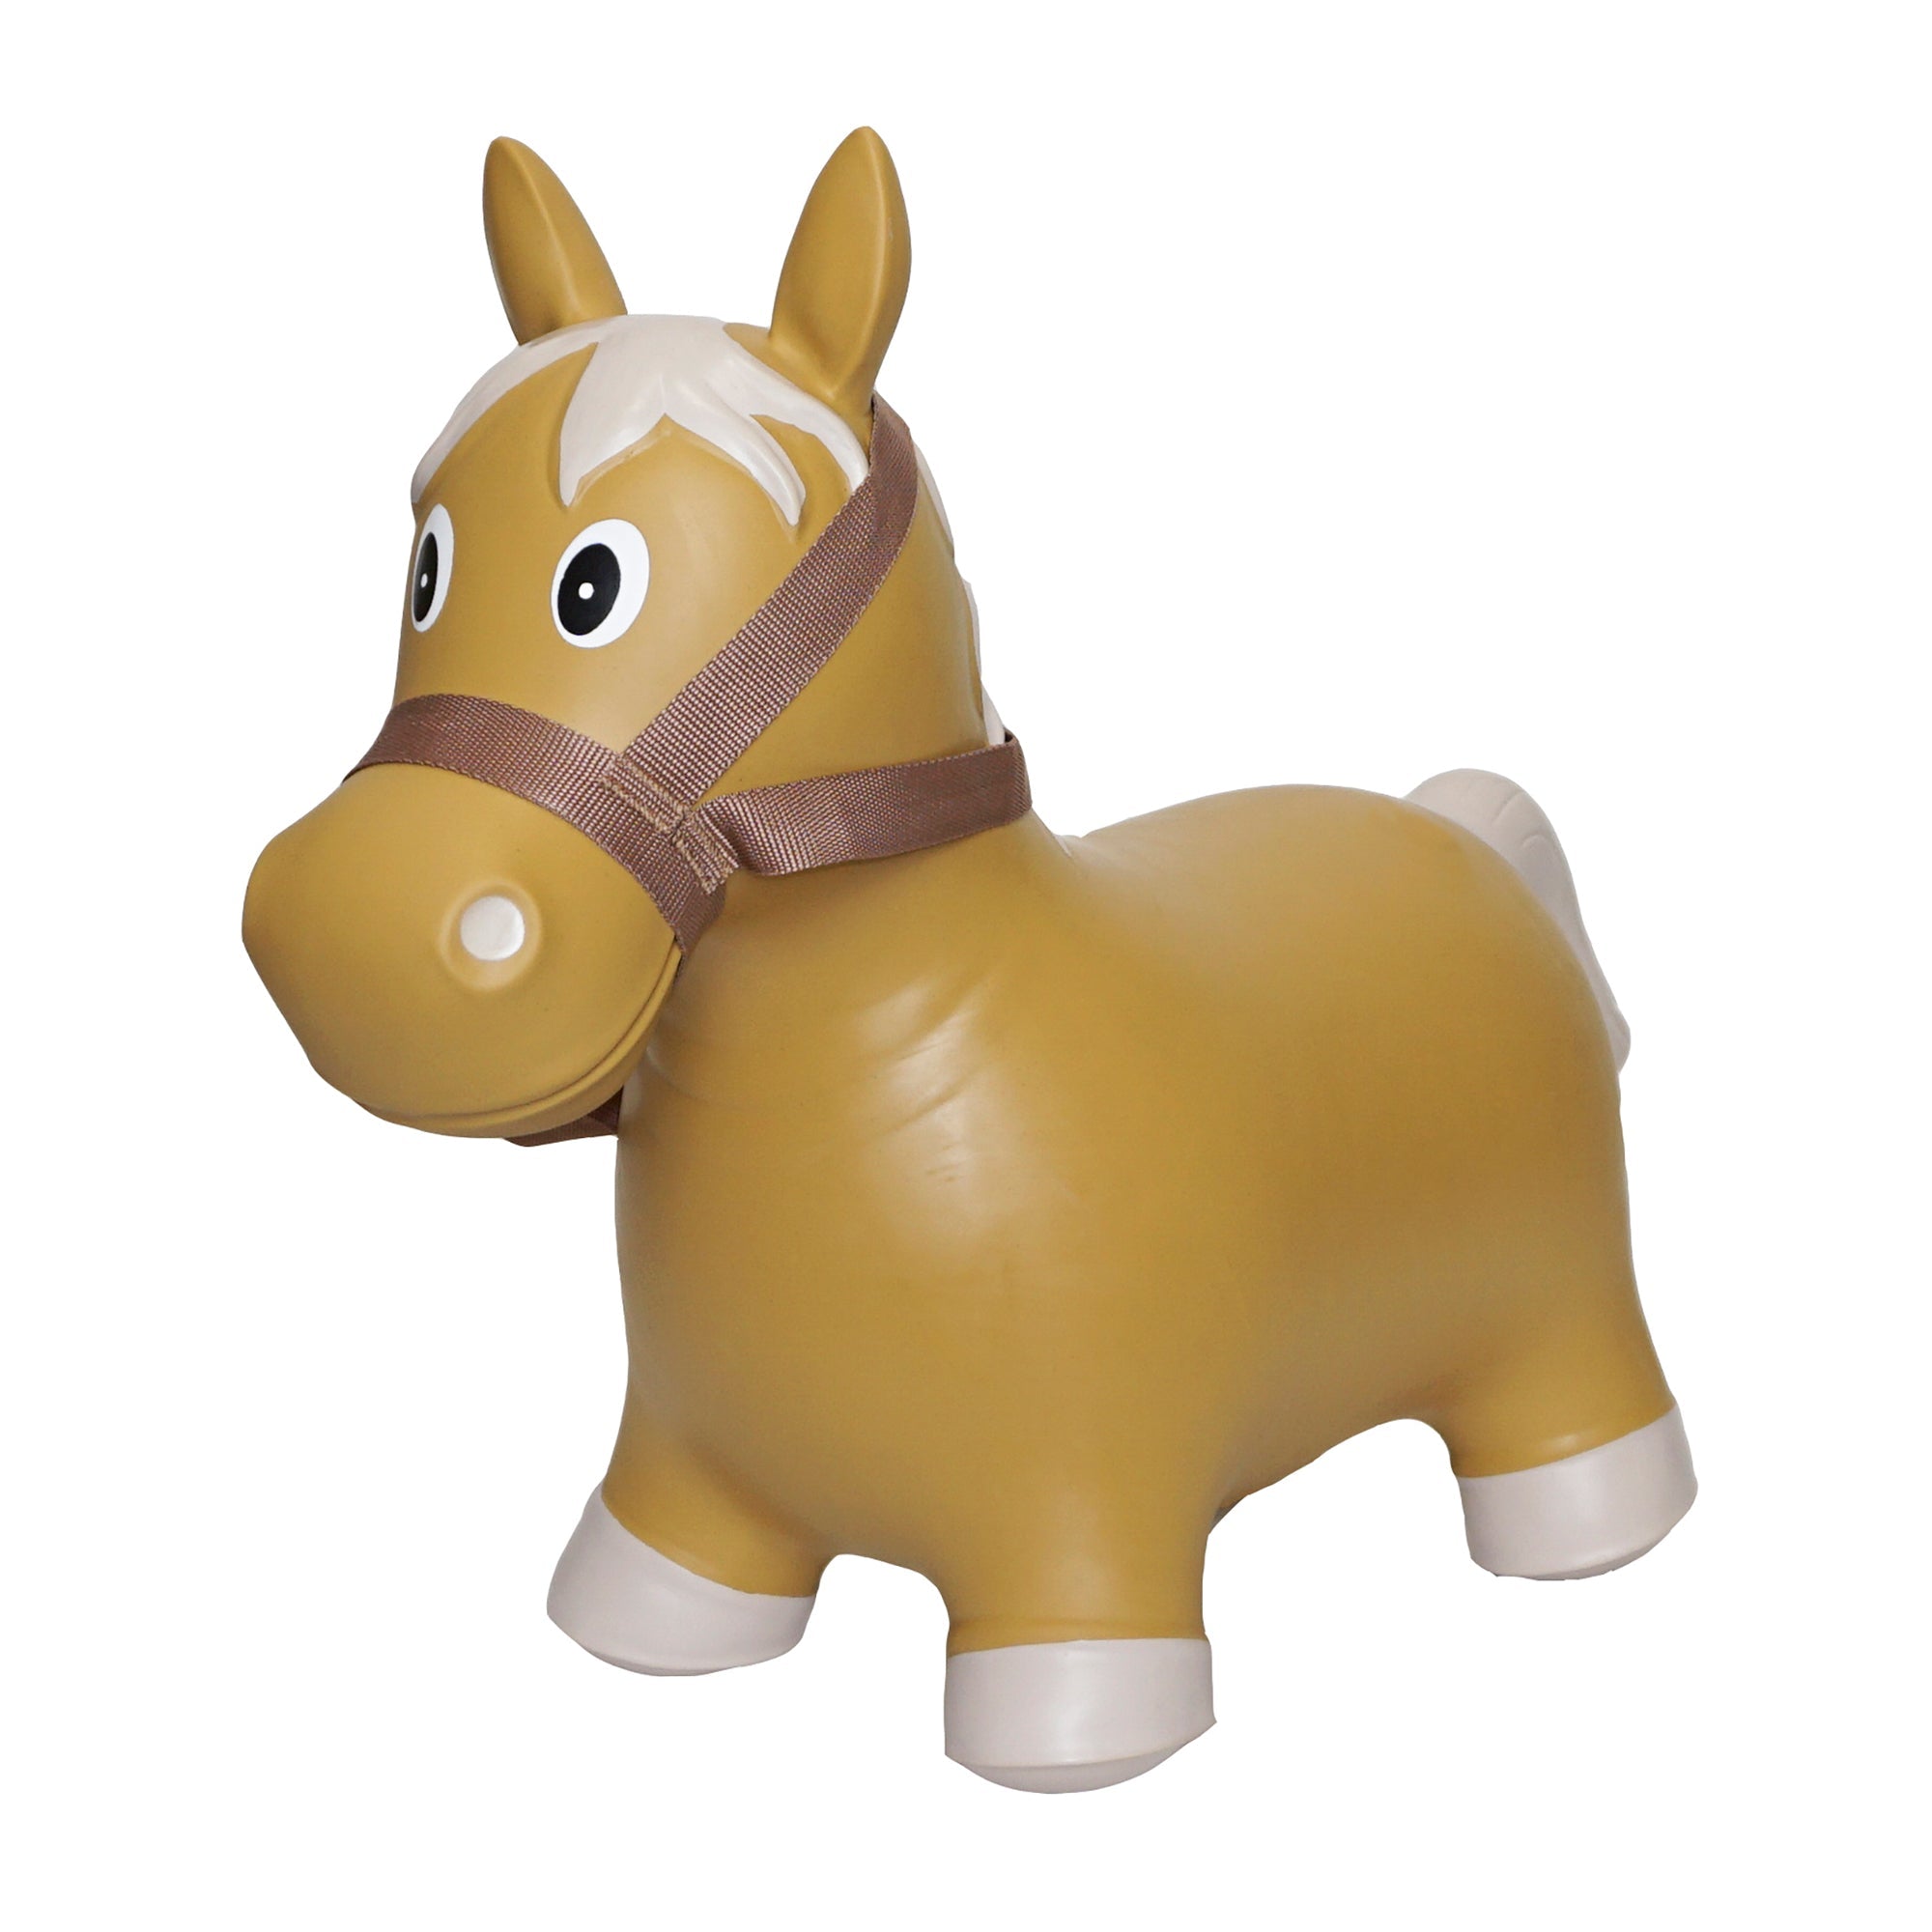 Big Country Toys Border Collie - 1:20 Scale - Toy Animals - Farm Toys -  Wild Animal Figurines